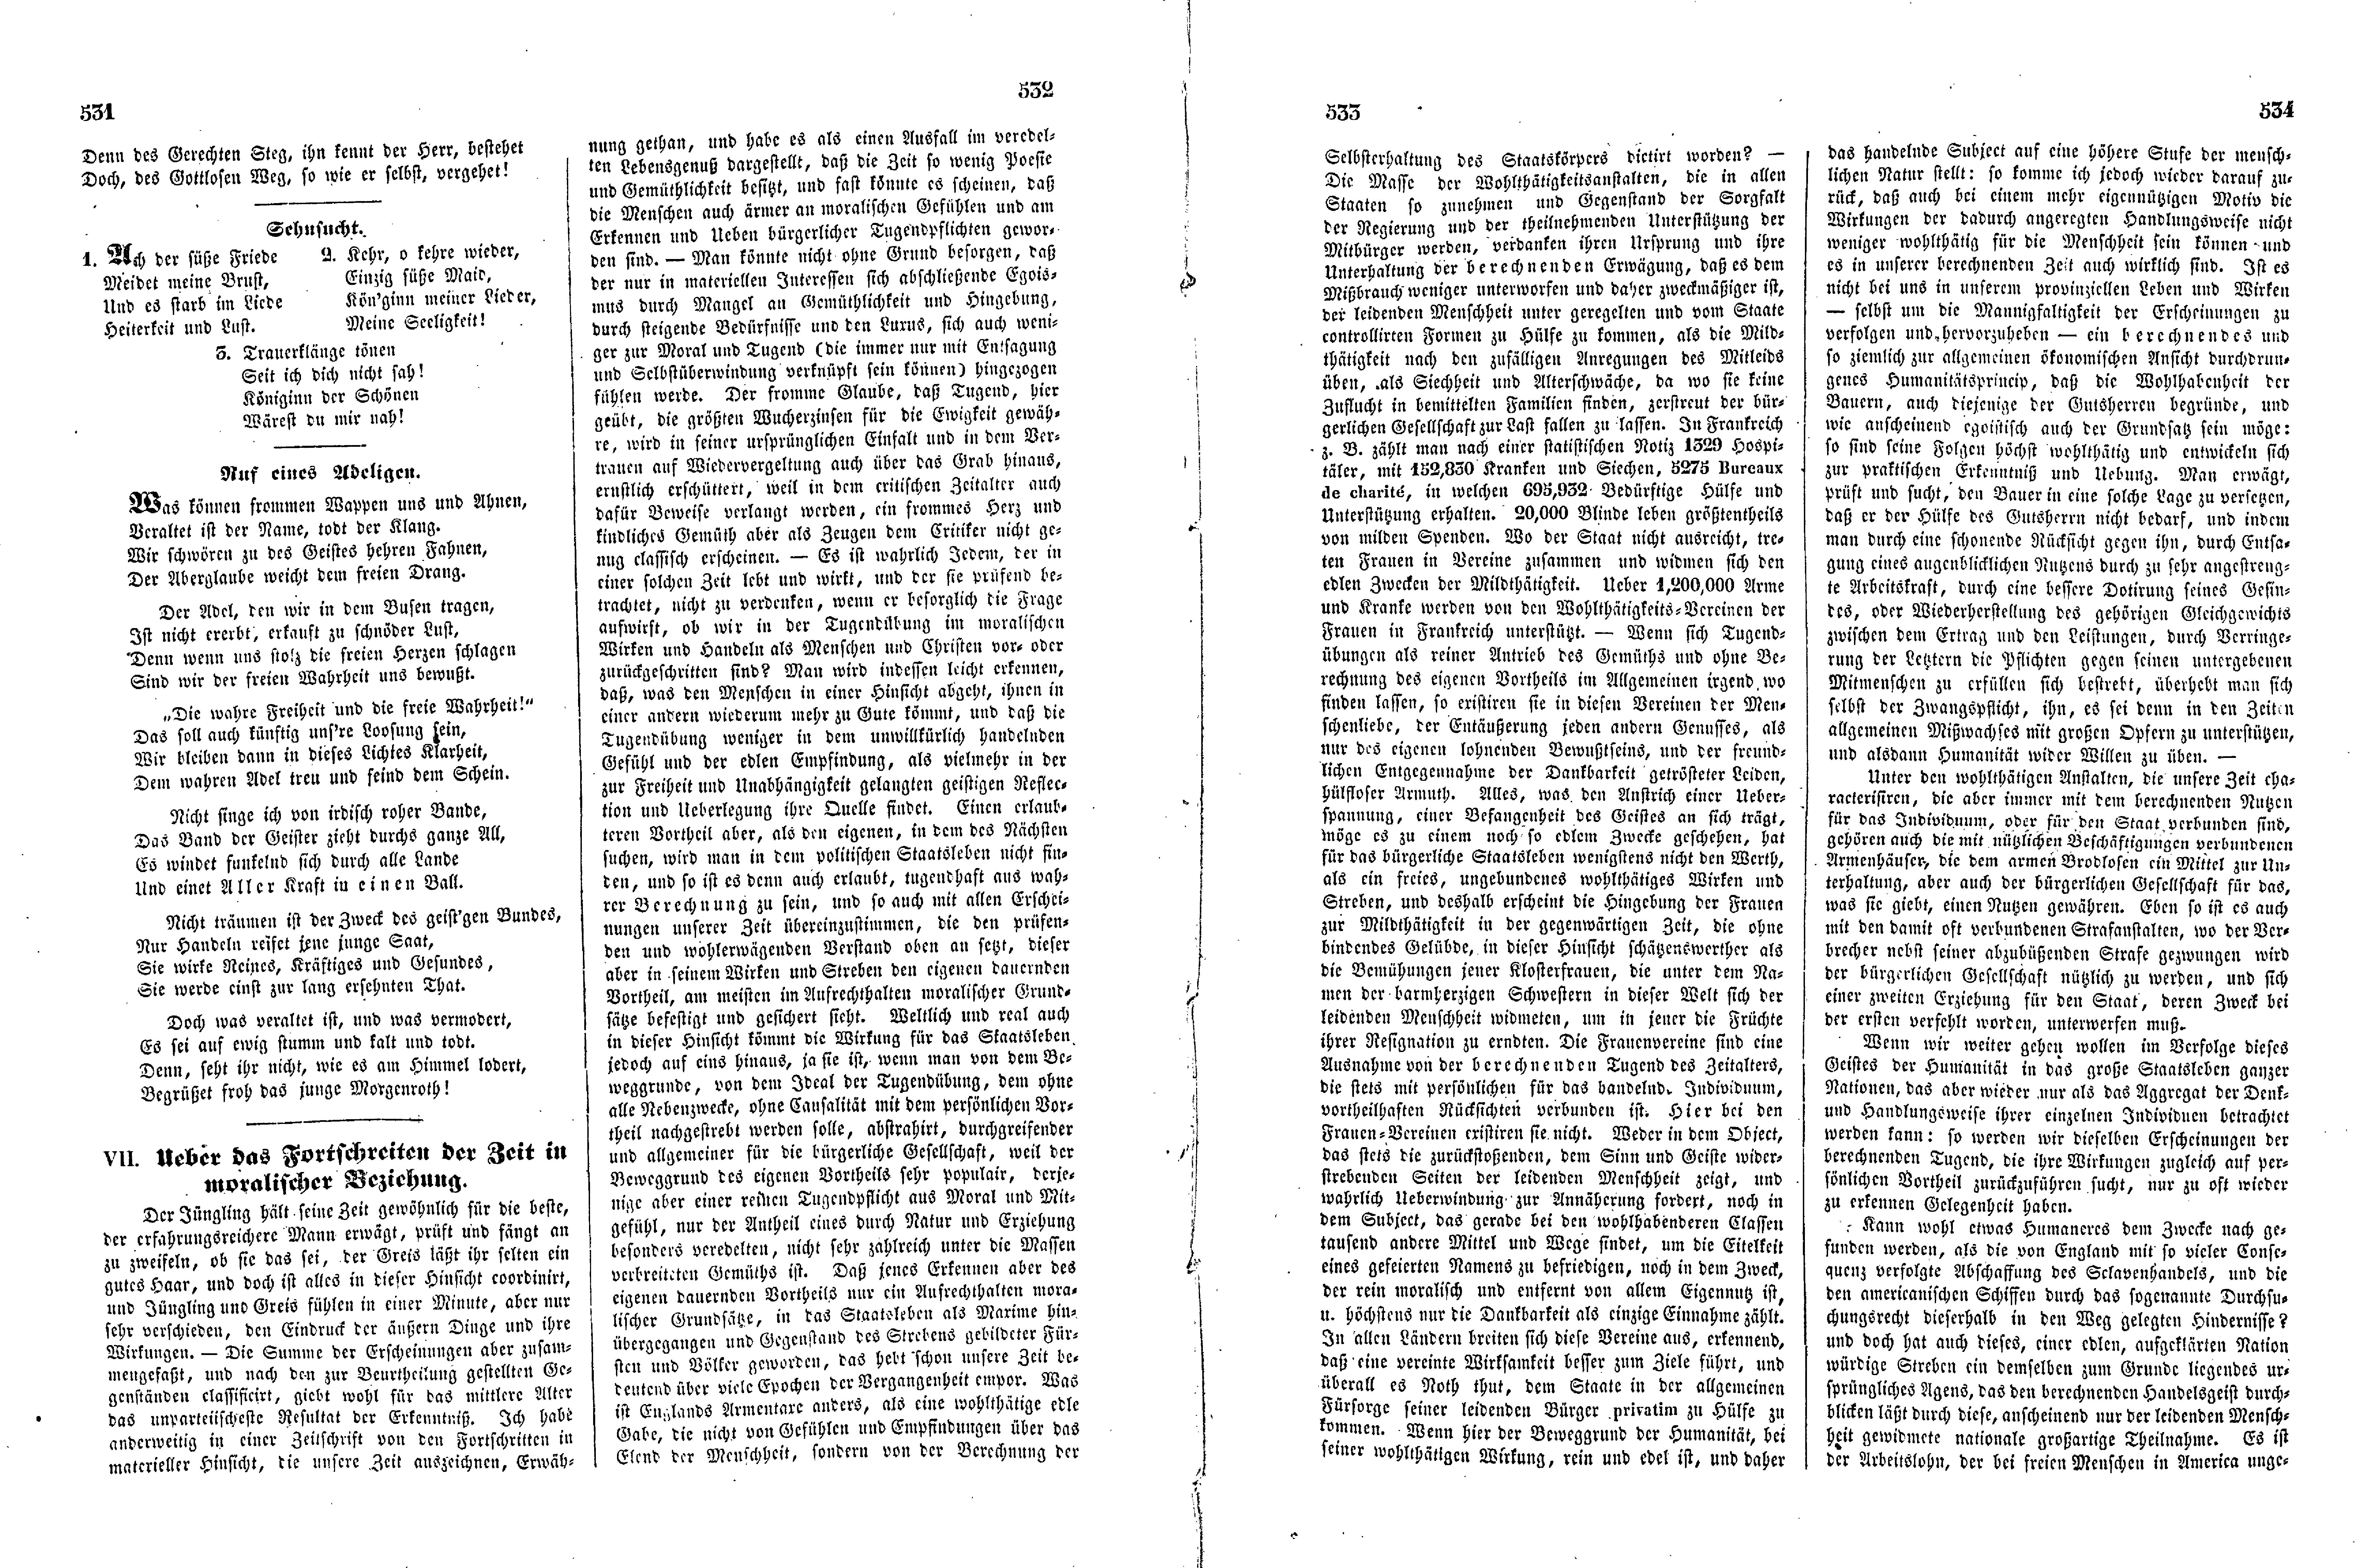 Das Inland [11] (1846) | 138. (531-534) Main body of text